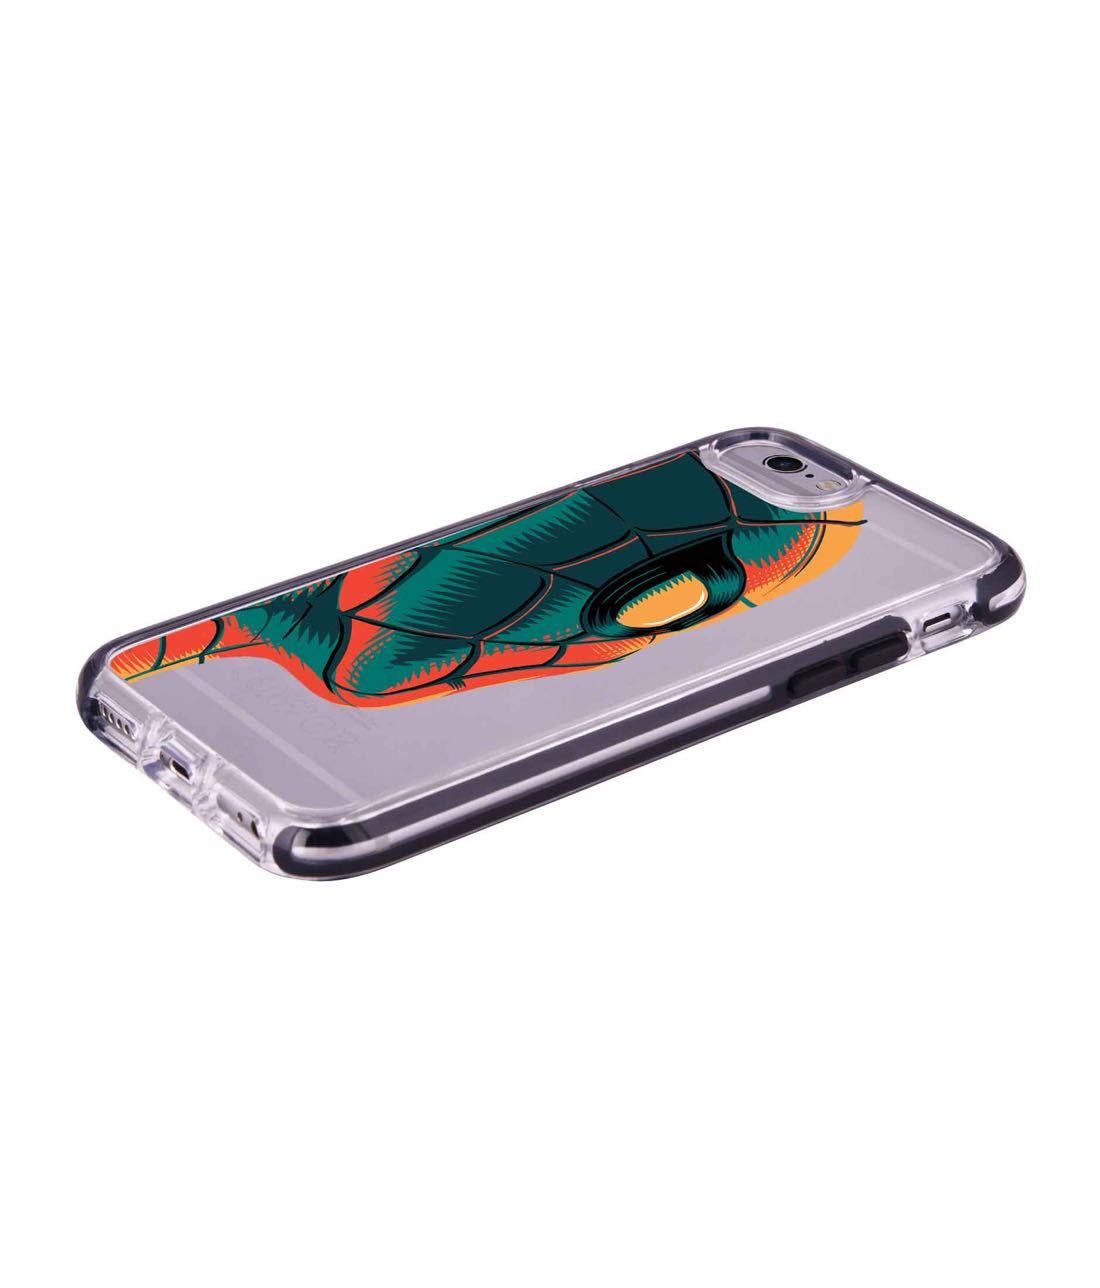 Illuminated Spiderman - Extreme Phone Case for iPhone 6S Plus